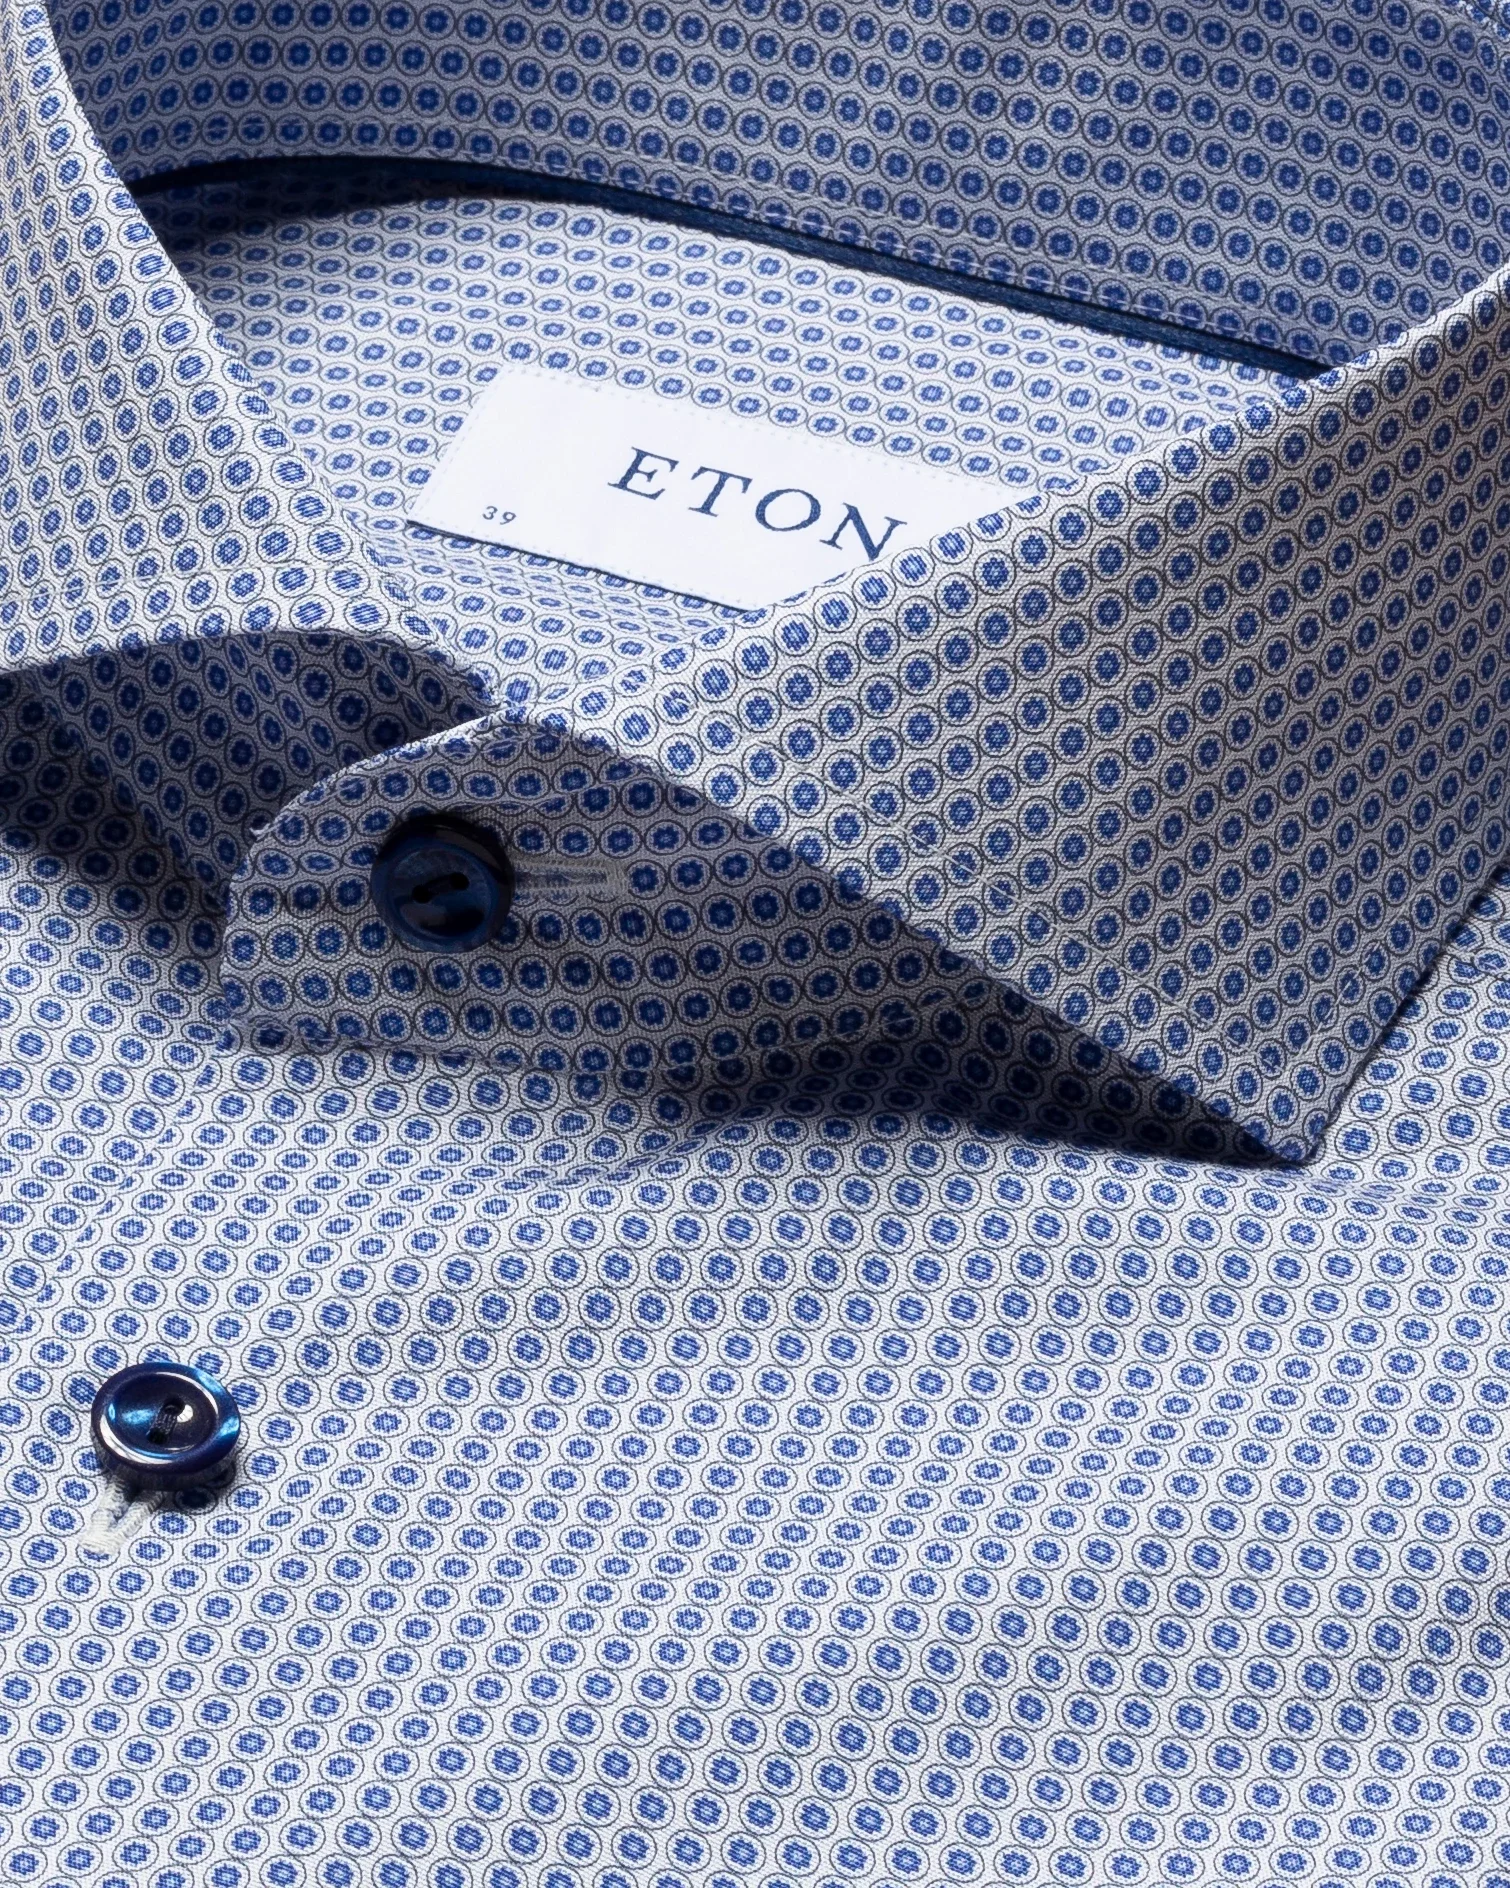 Eton - blue glass print poplin shirt extreme cut away